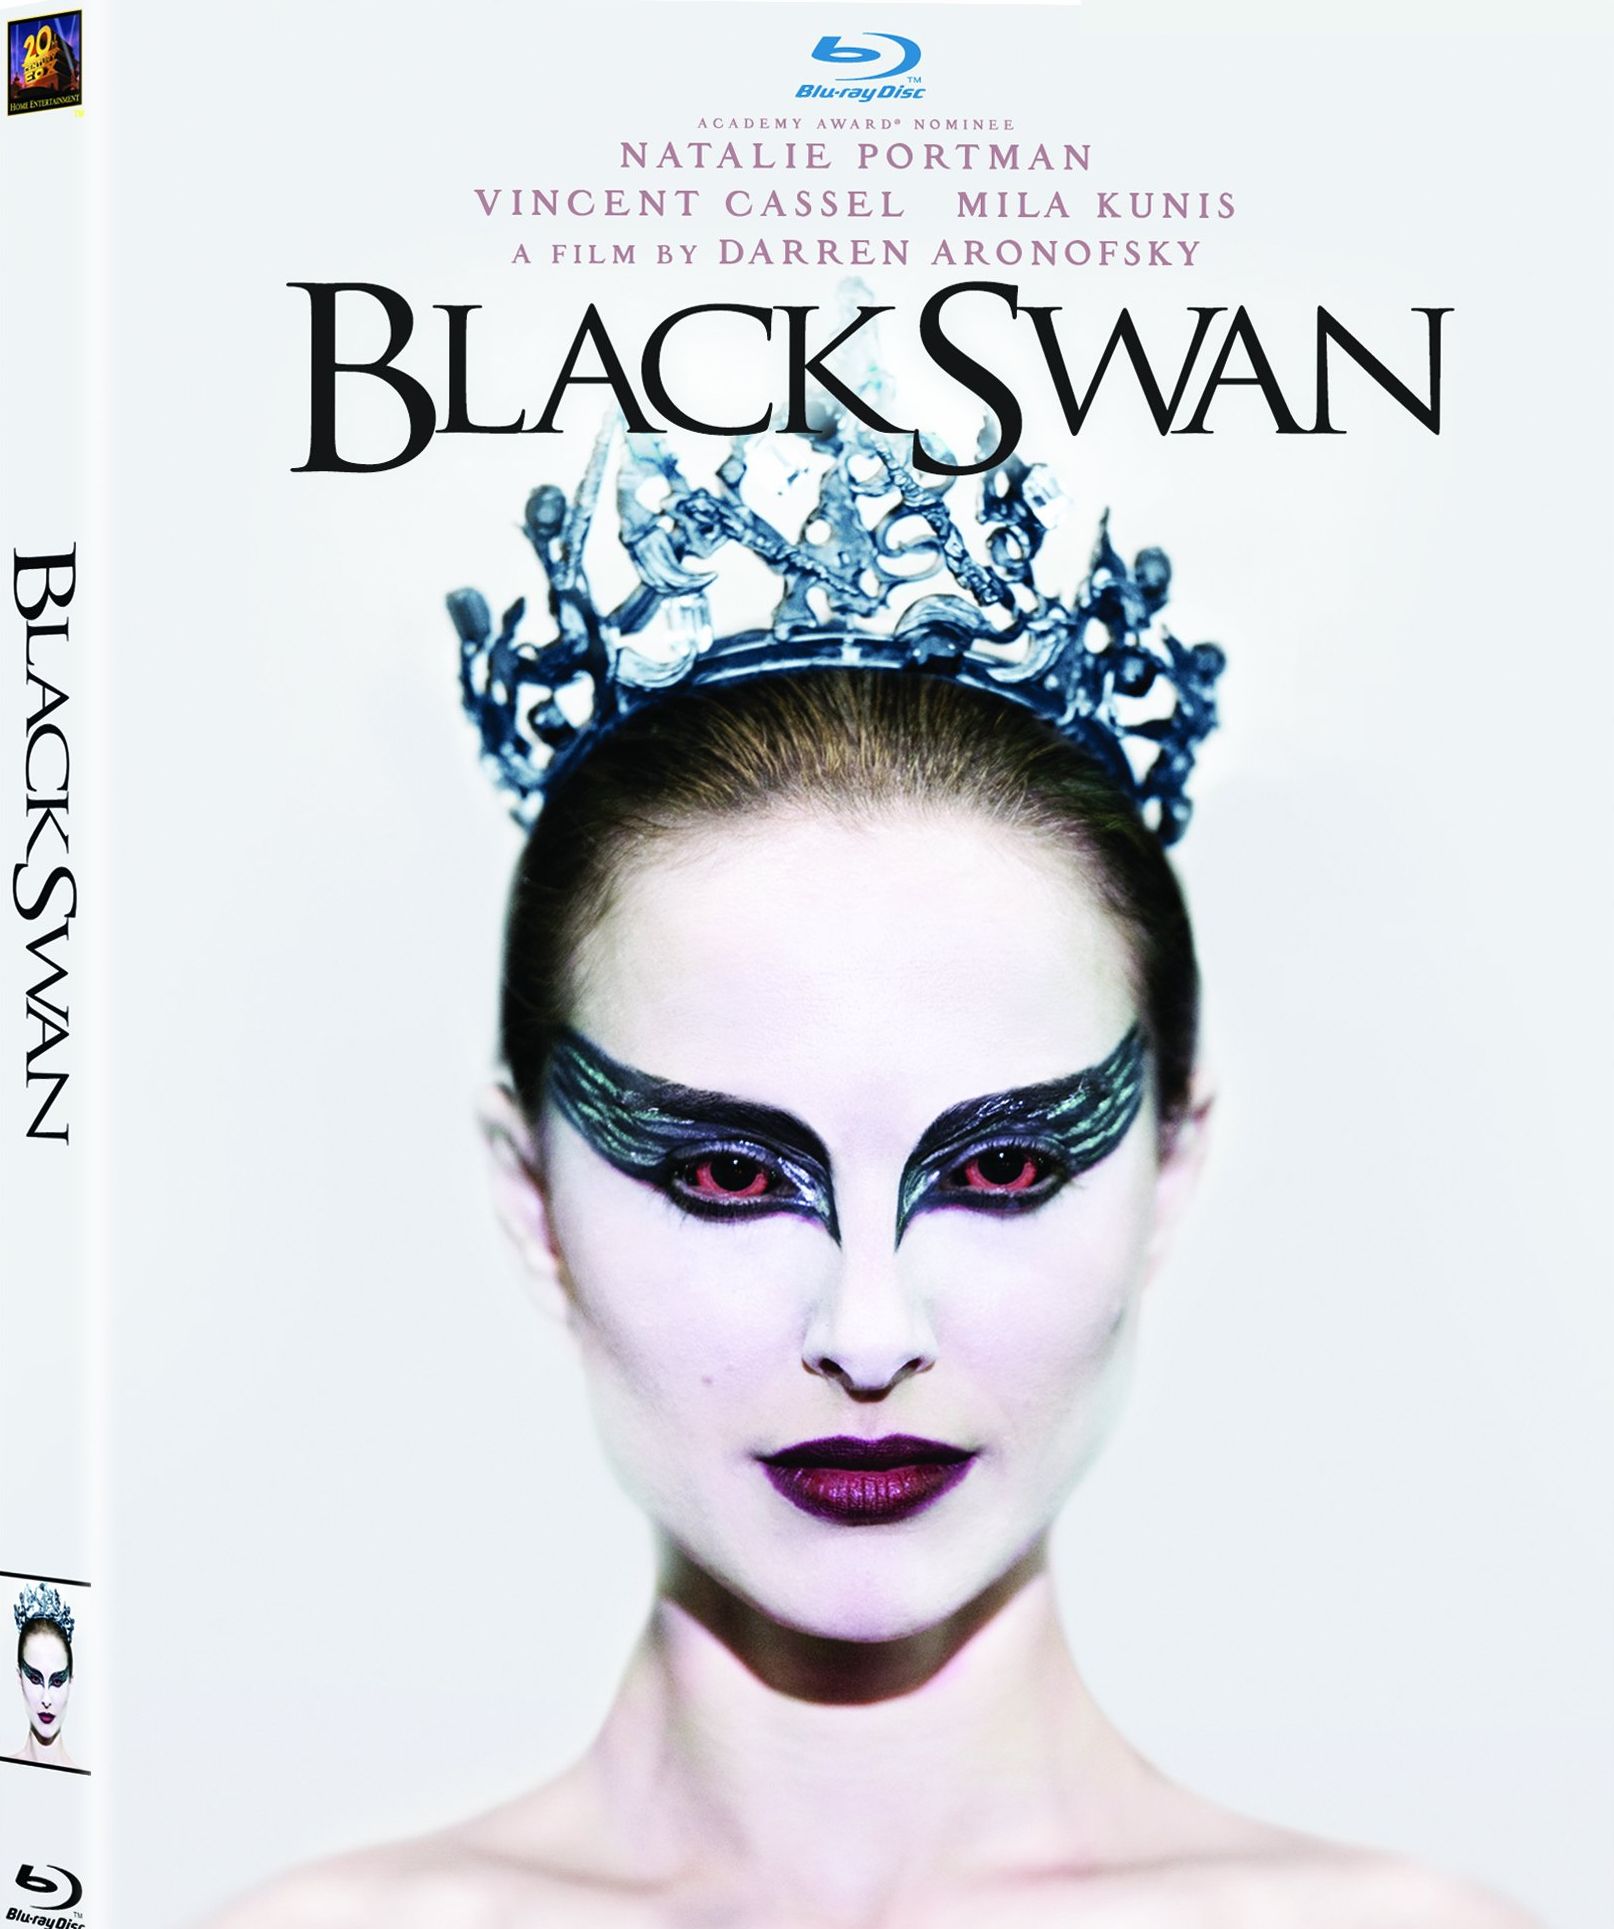 Black swan photo